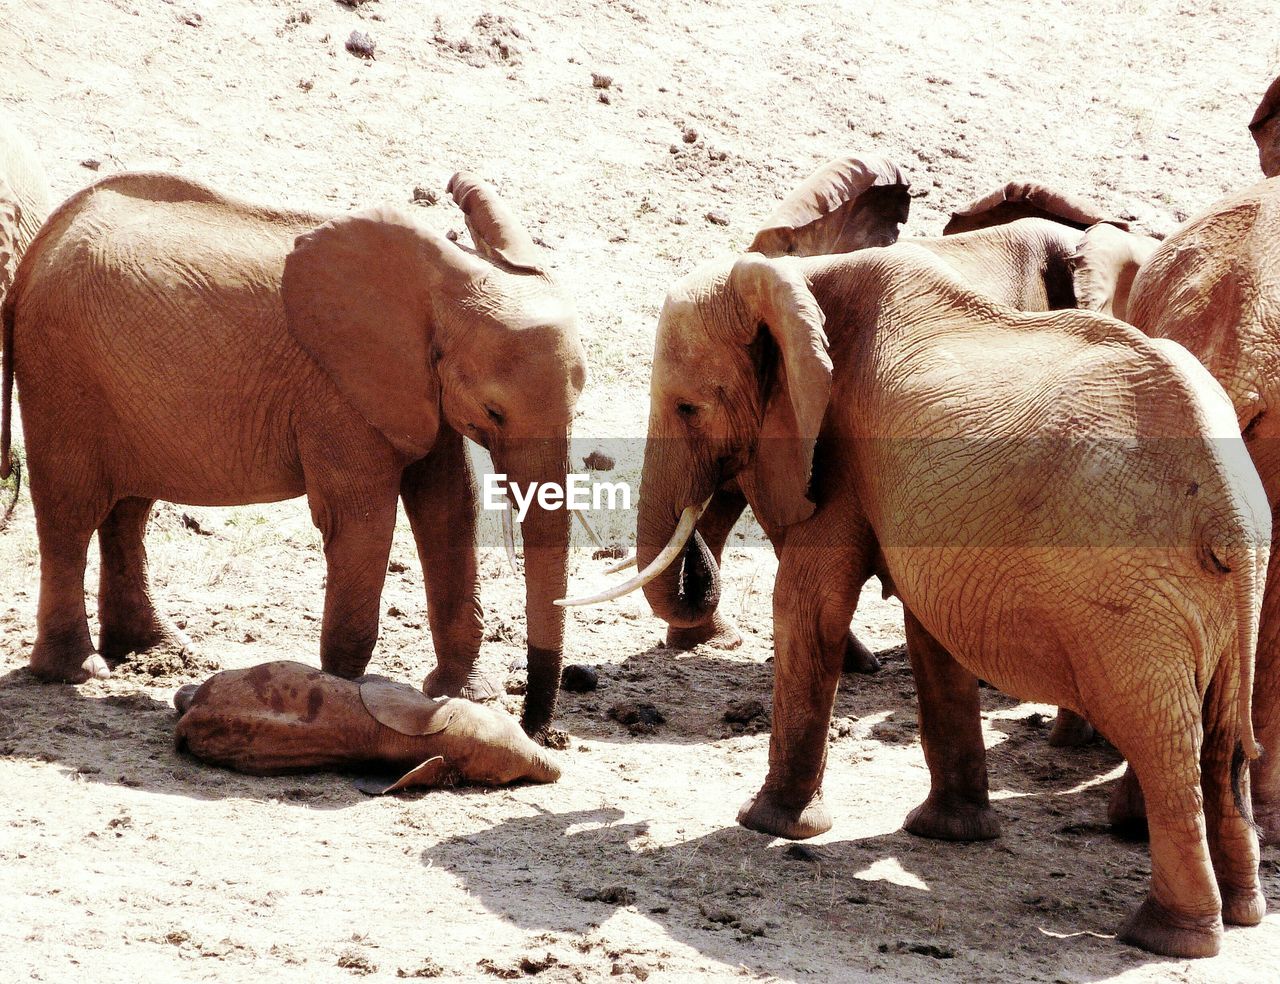 African elephants standing by newborn calf lying down